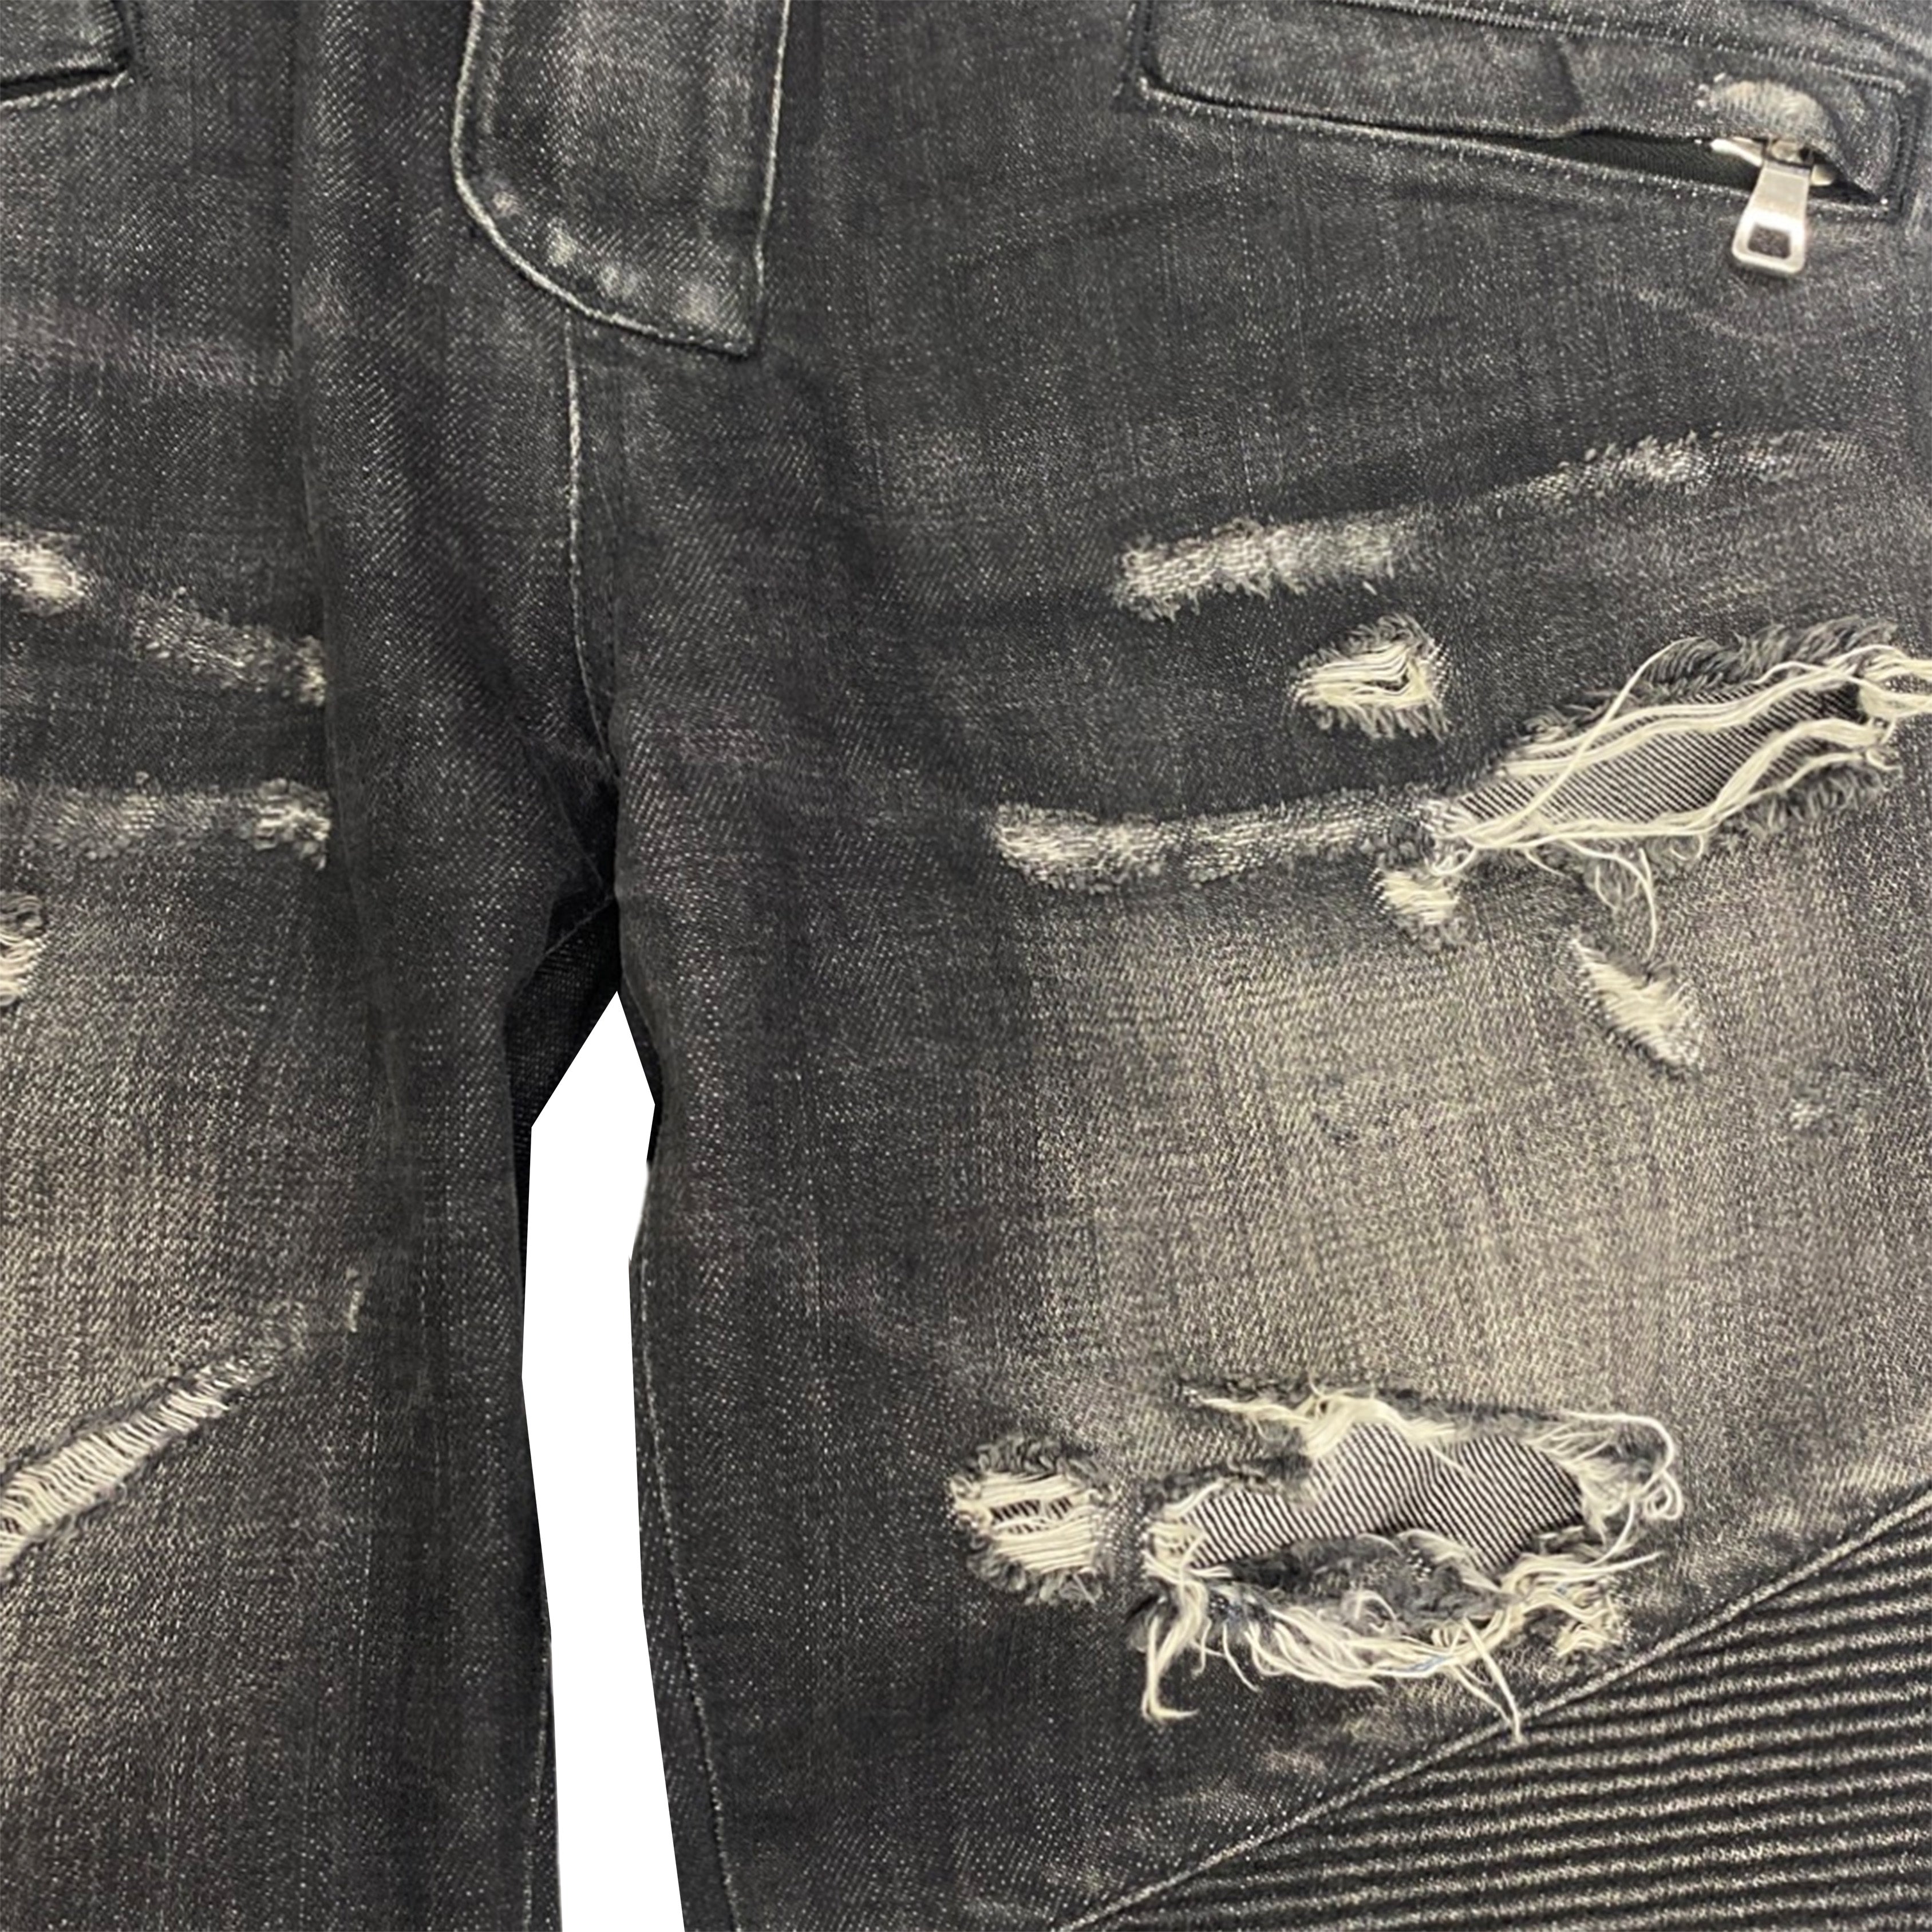 BALMAIN Skinny-fit distressed denim jeans | THE OUTNET